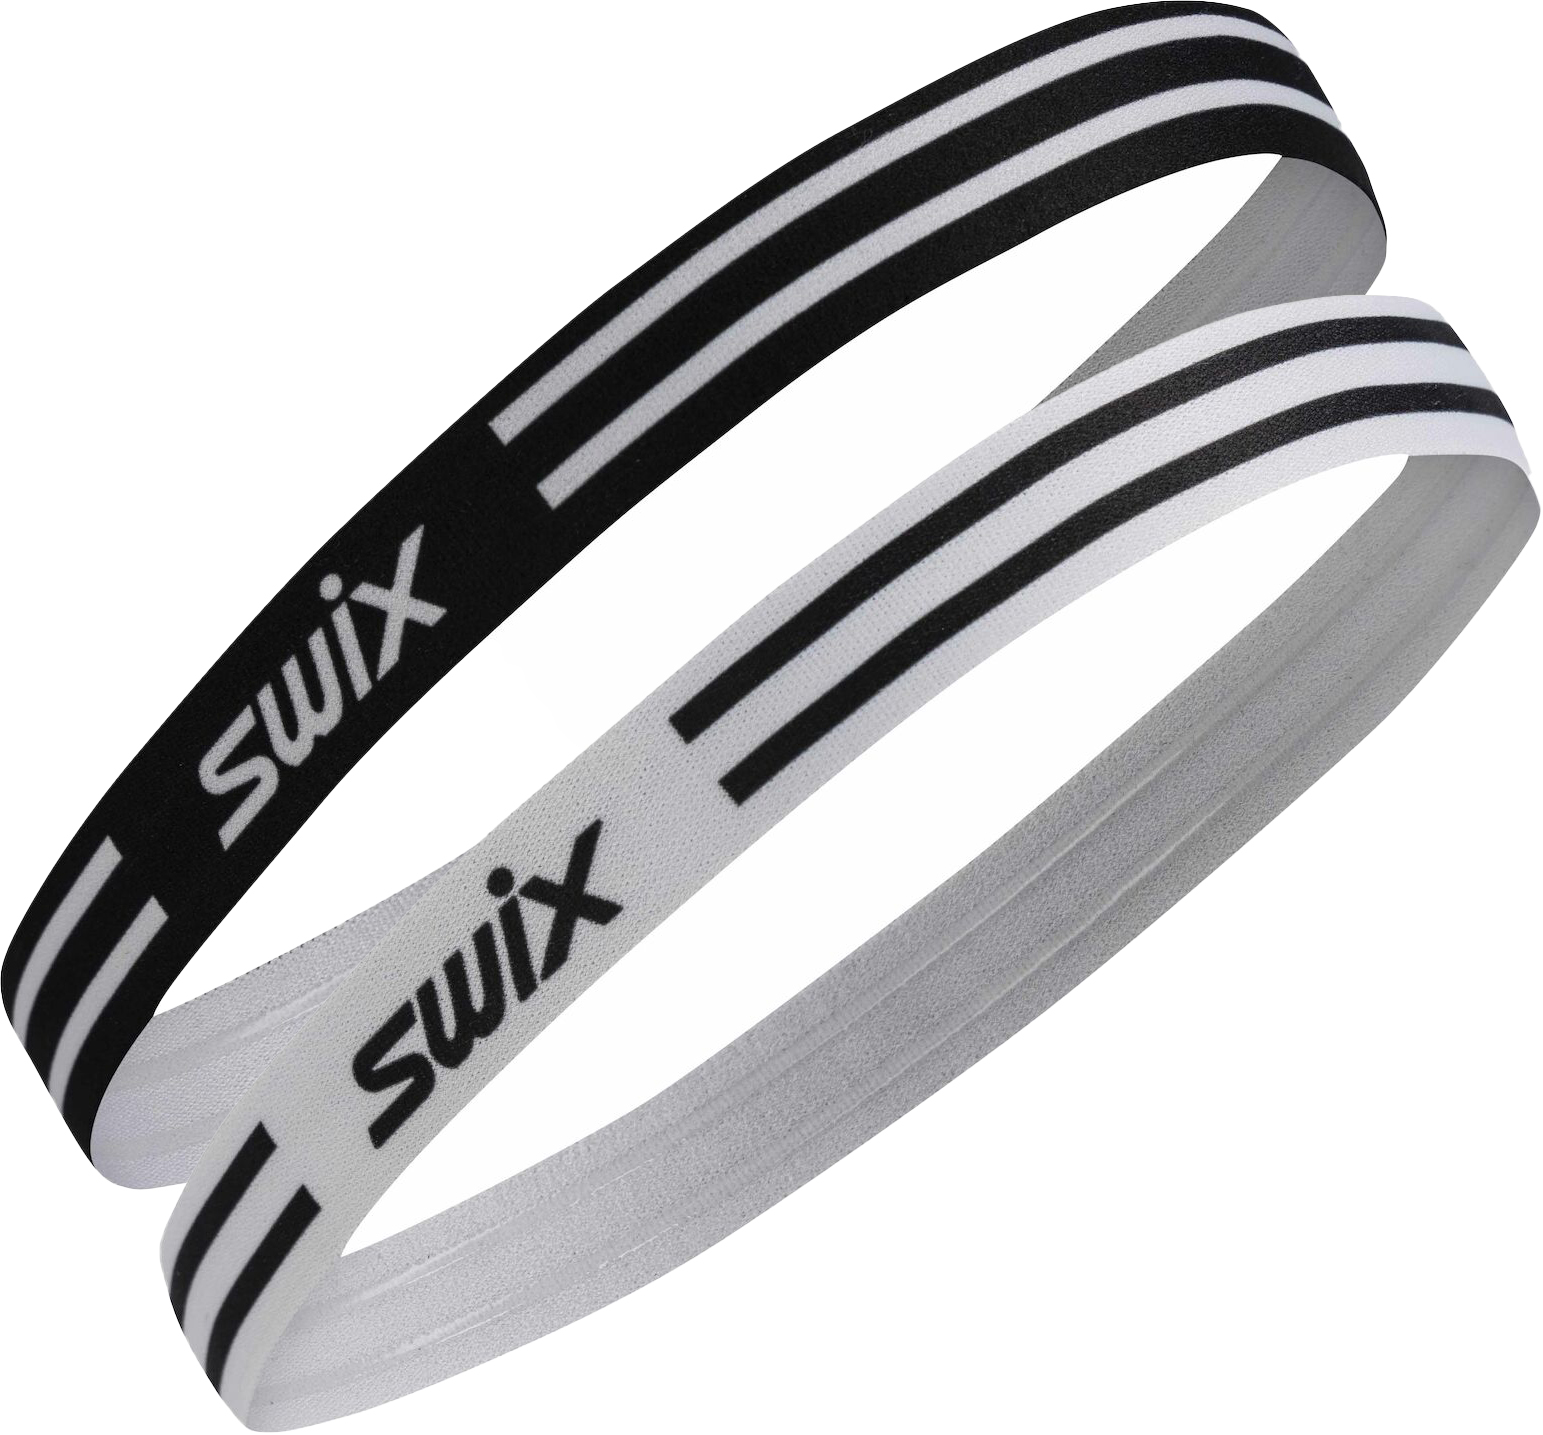 Swix Vantage Elastic Hairbands 2pk Black/Bright White